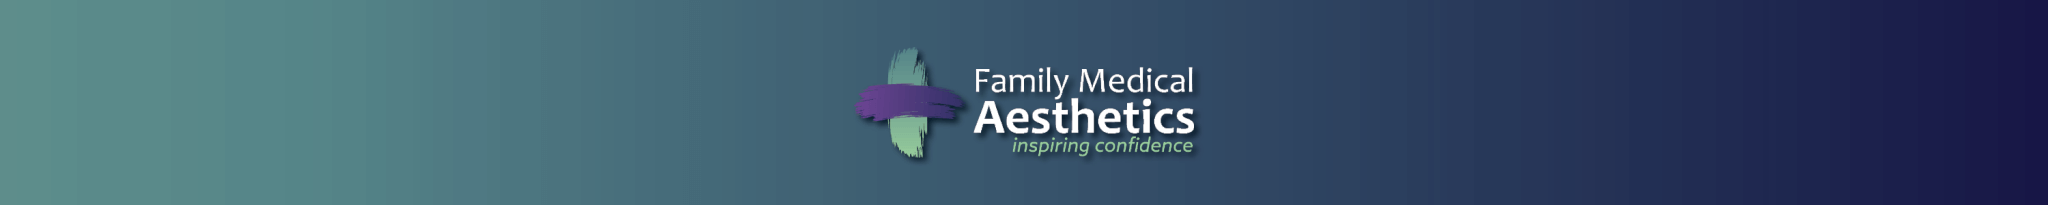 Family Medical Aesthetics: inspiring confidence